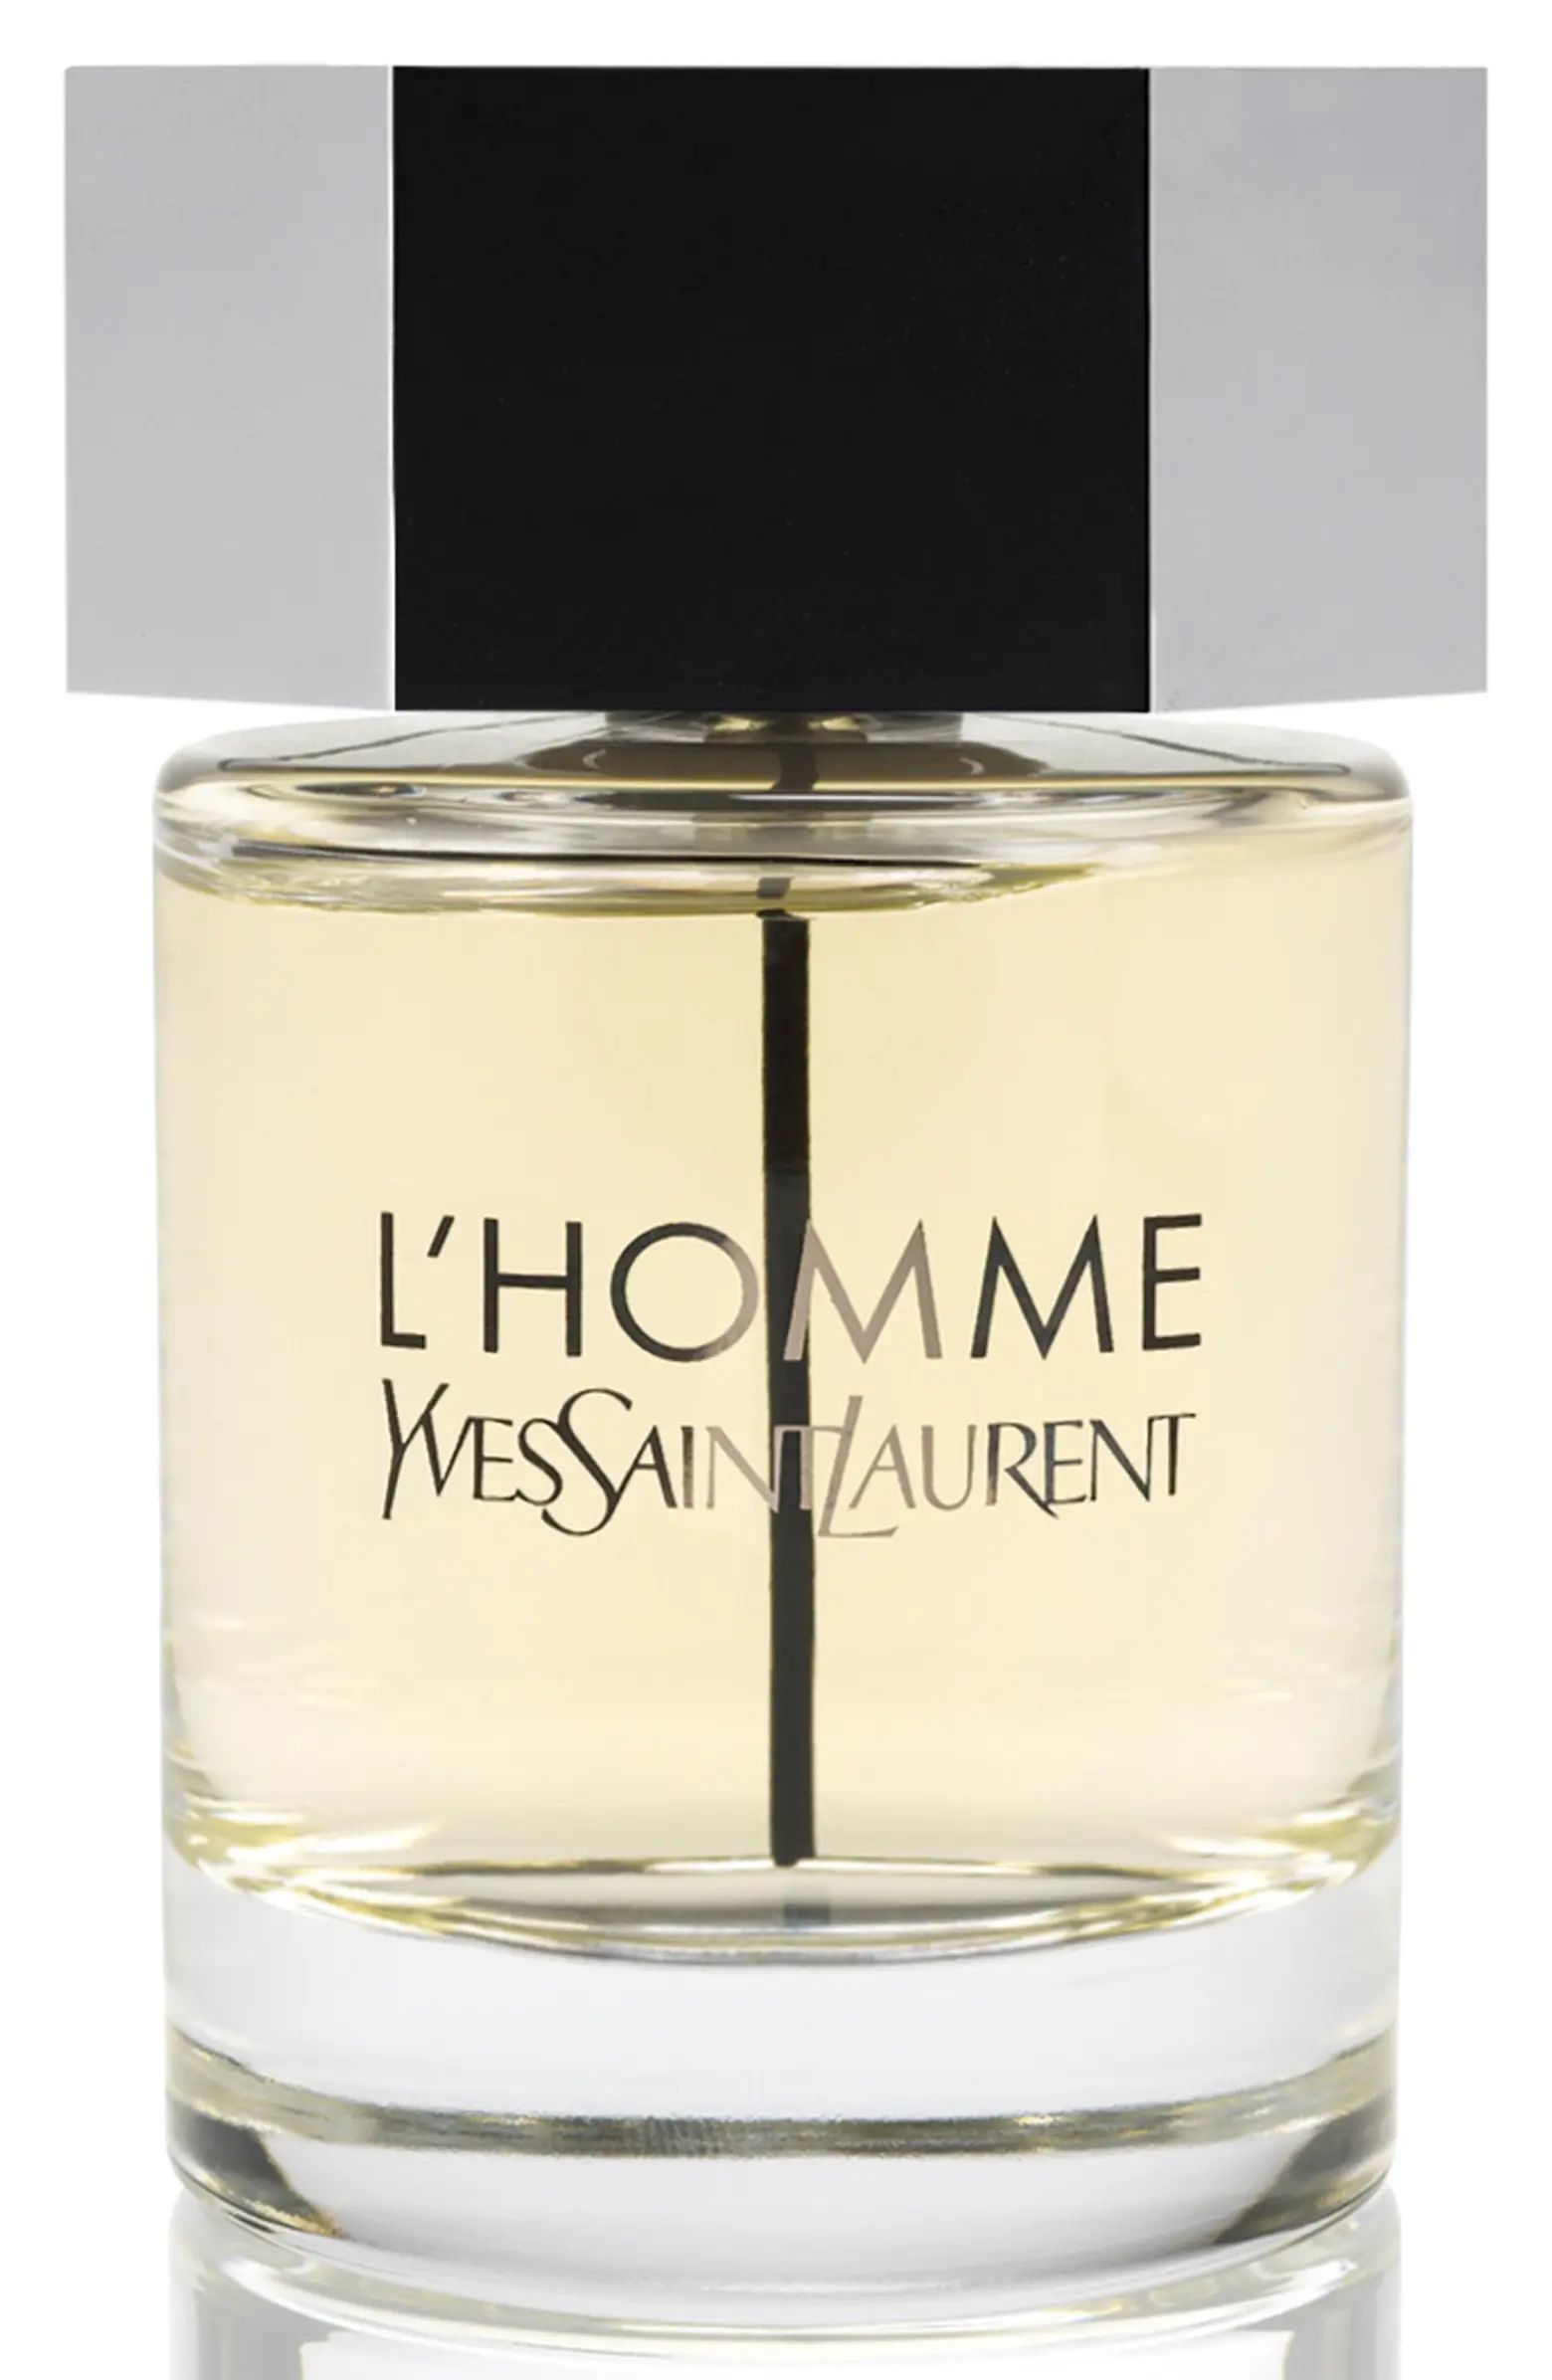 Yves Saint Laurent L'Homme Eau de Toilette Fragrance | Nordstrom | Nordstrom